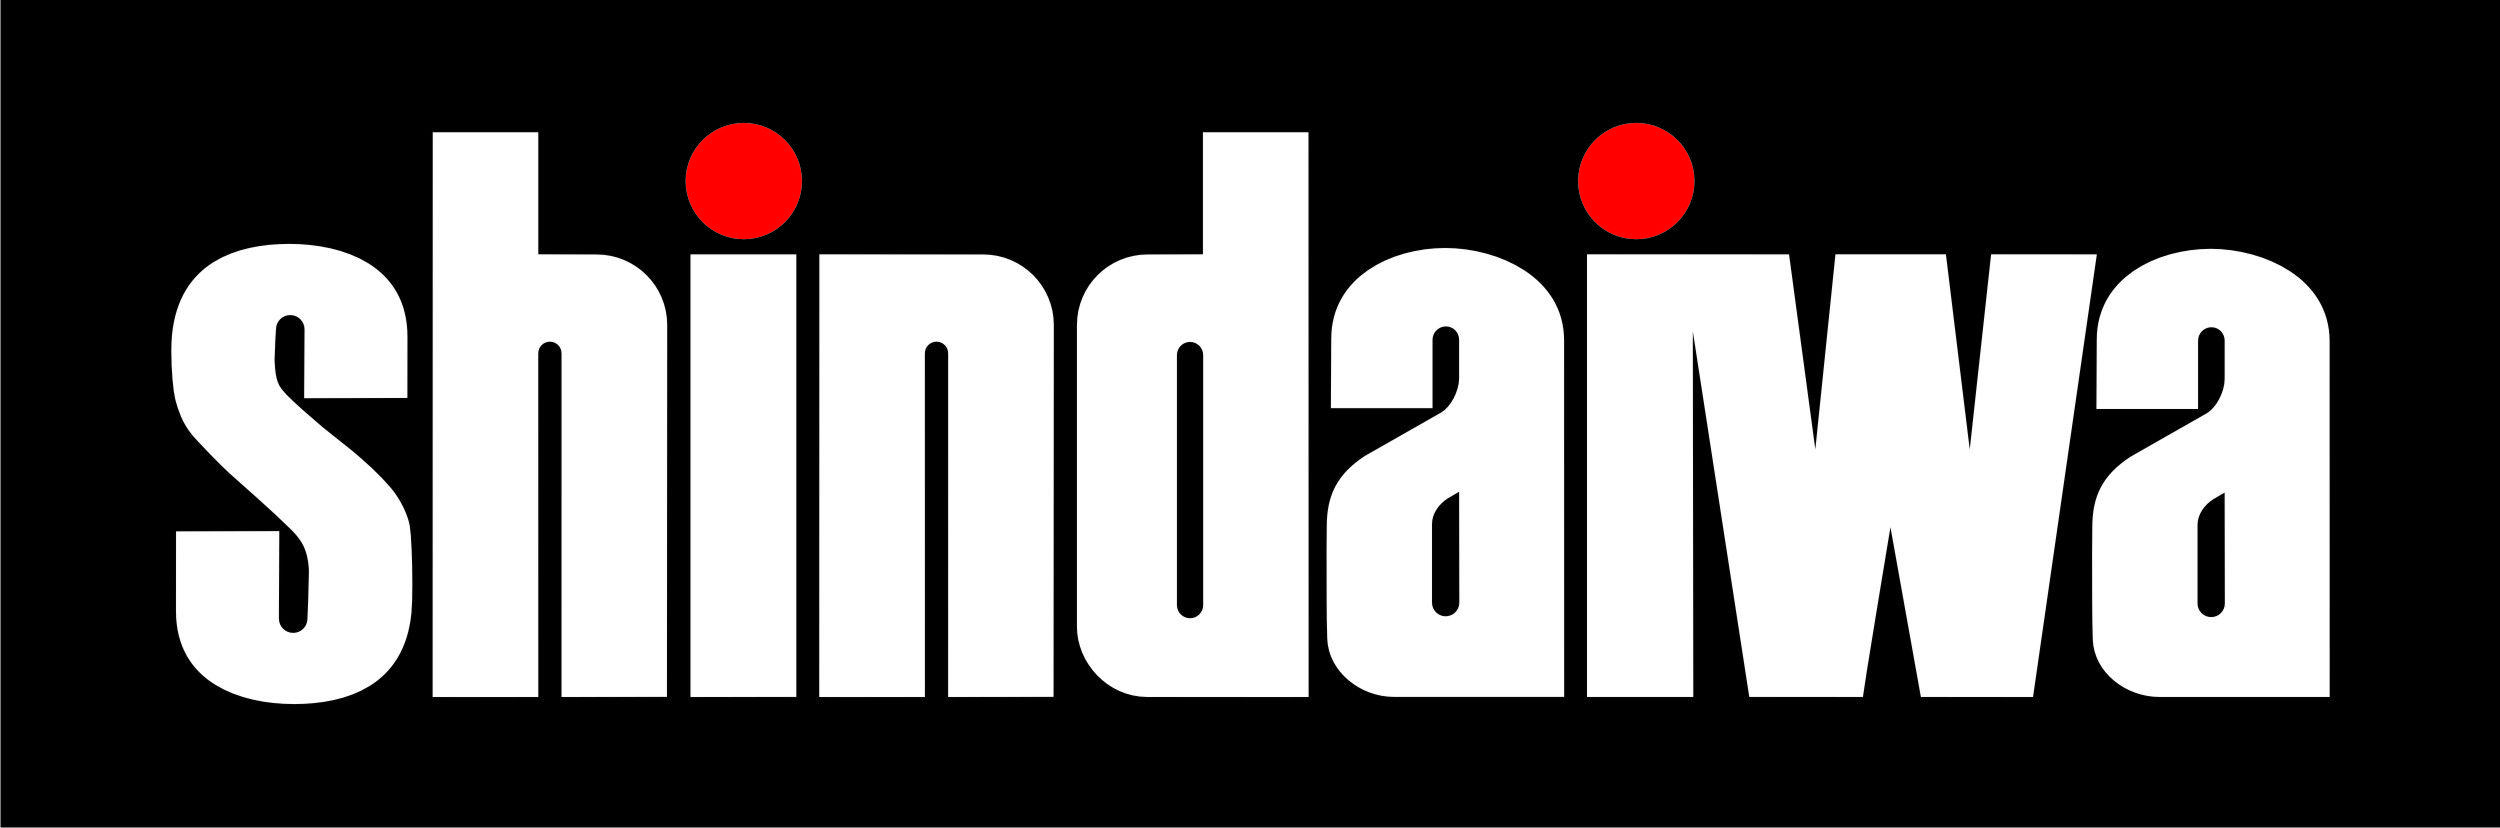 Shindaiwa Logo - LogoDix